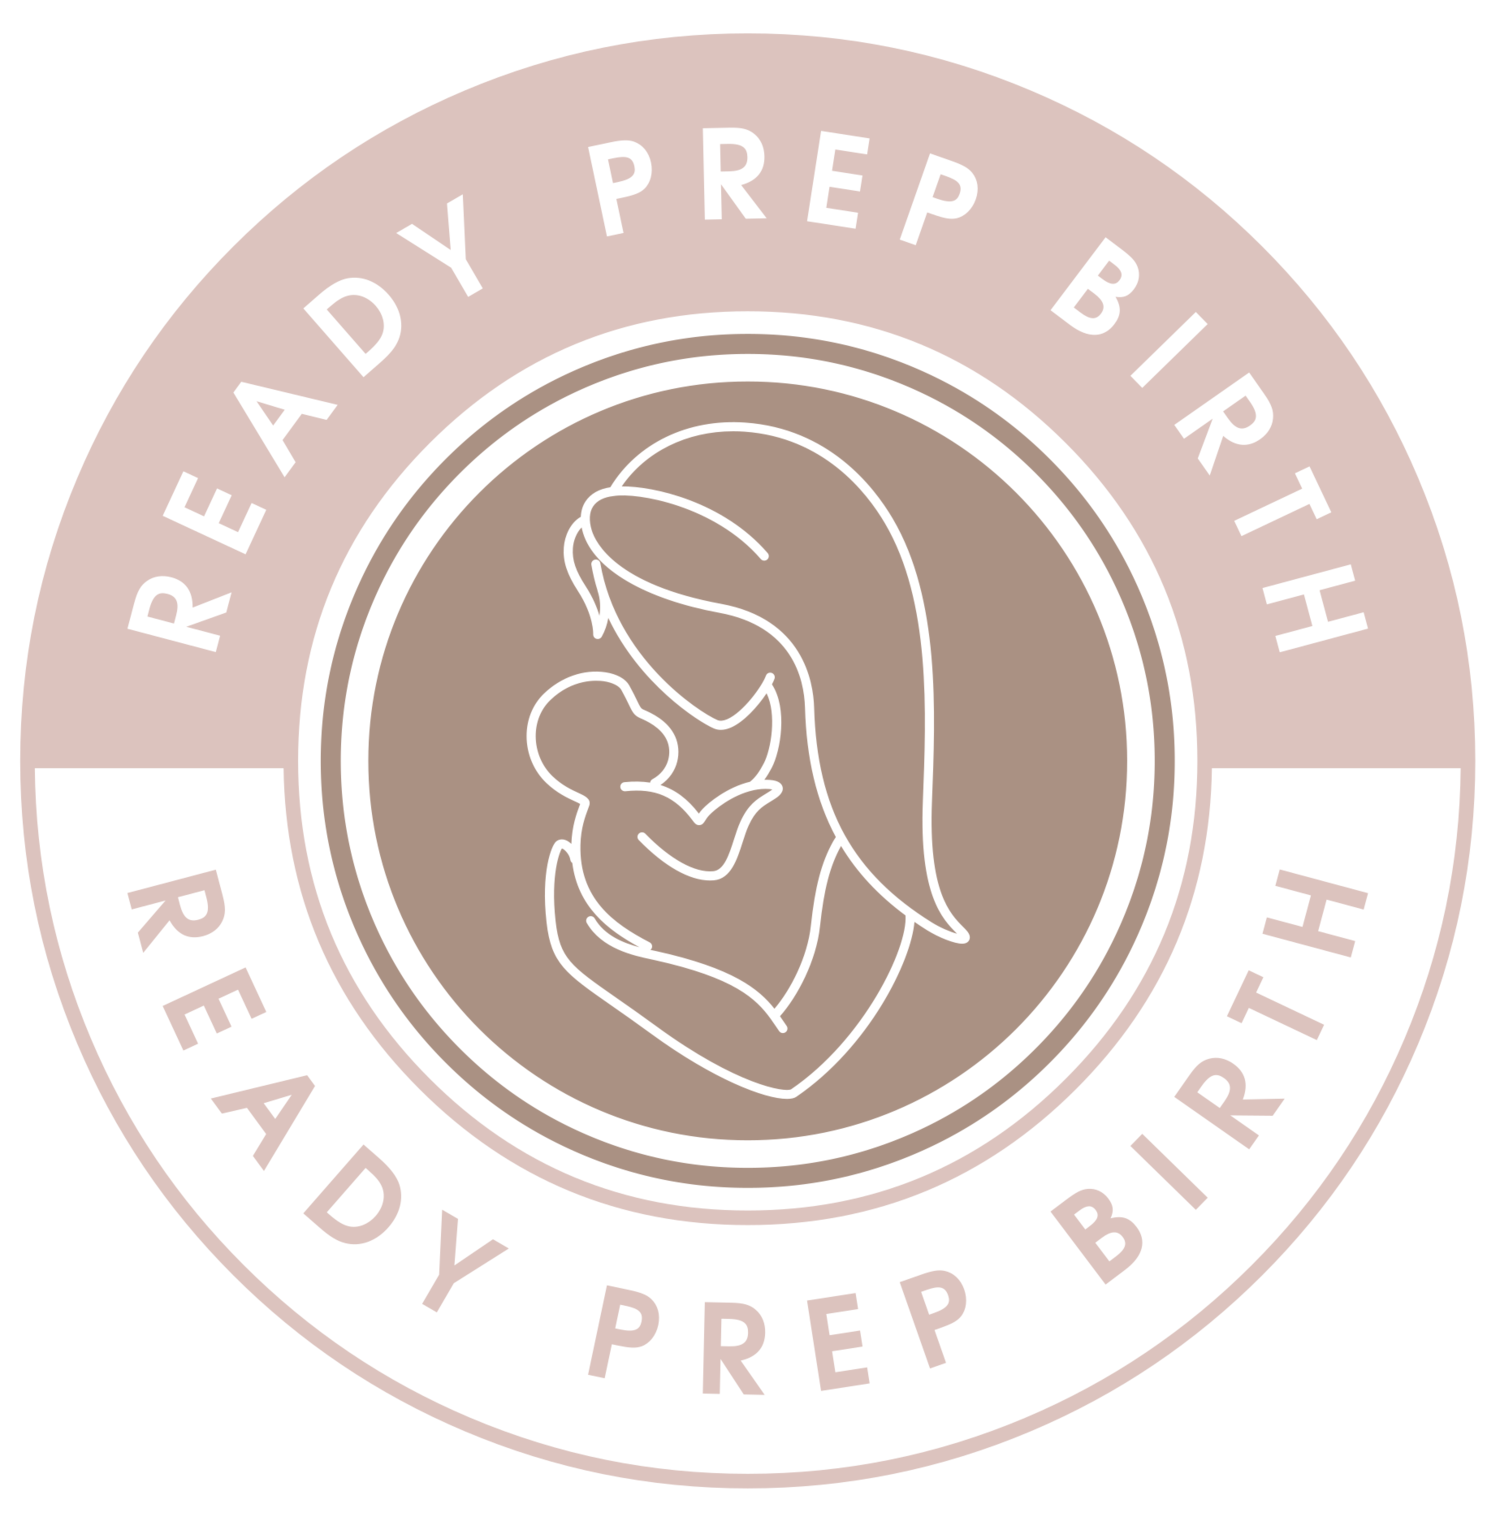 READY PREP BIRTH